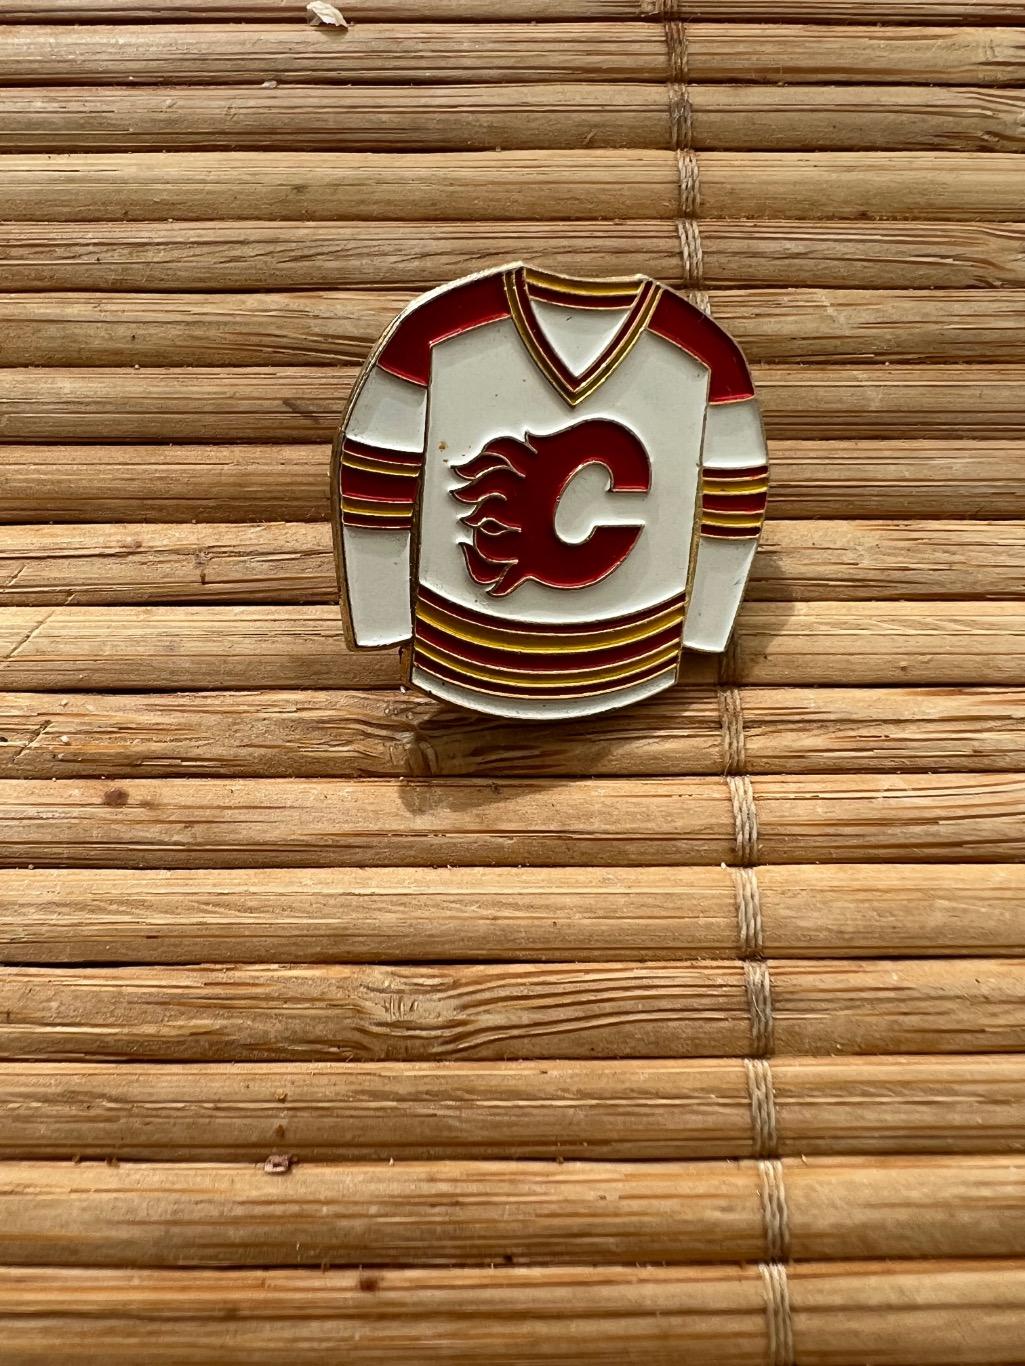 Официальный Знак значок Калгари Флэймс Calgary Flames NHL НХЛ 1990 Хоккей